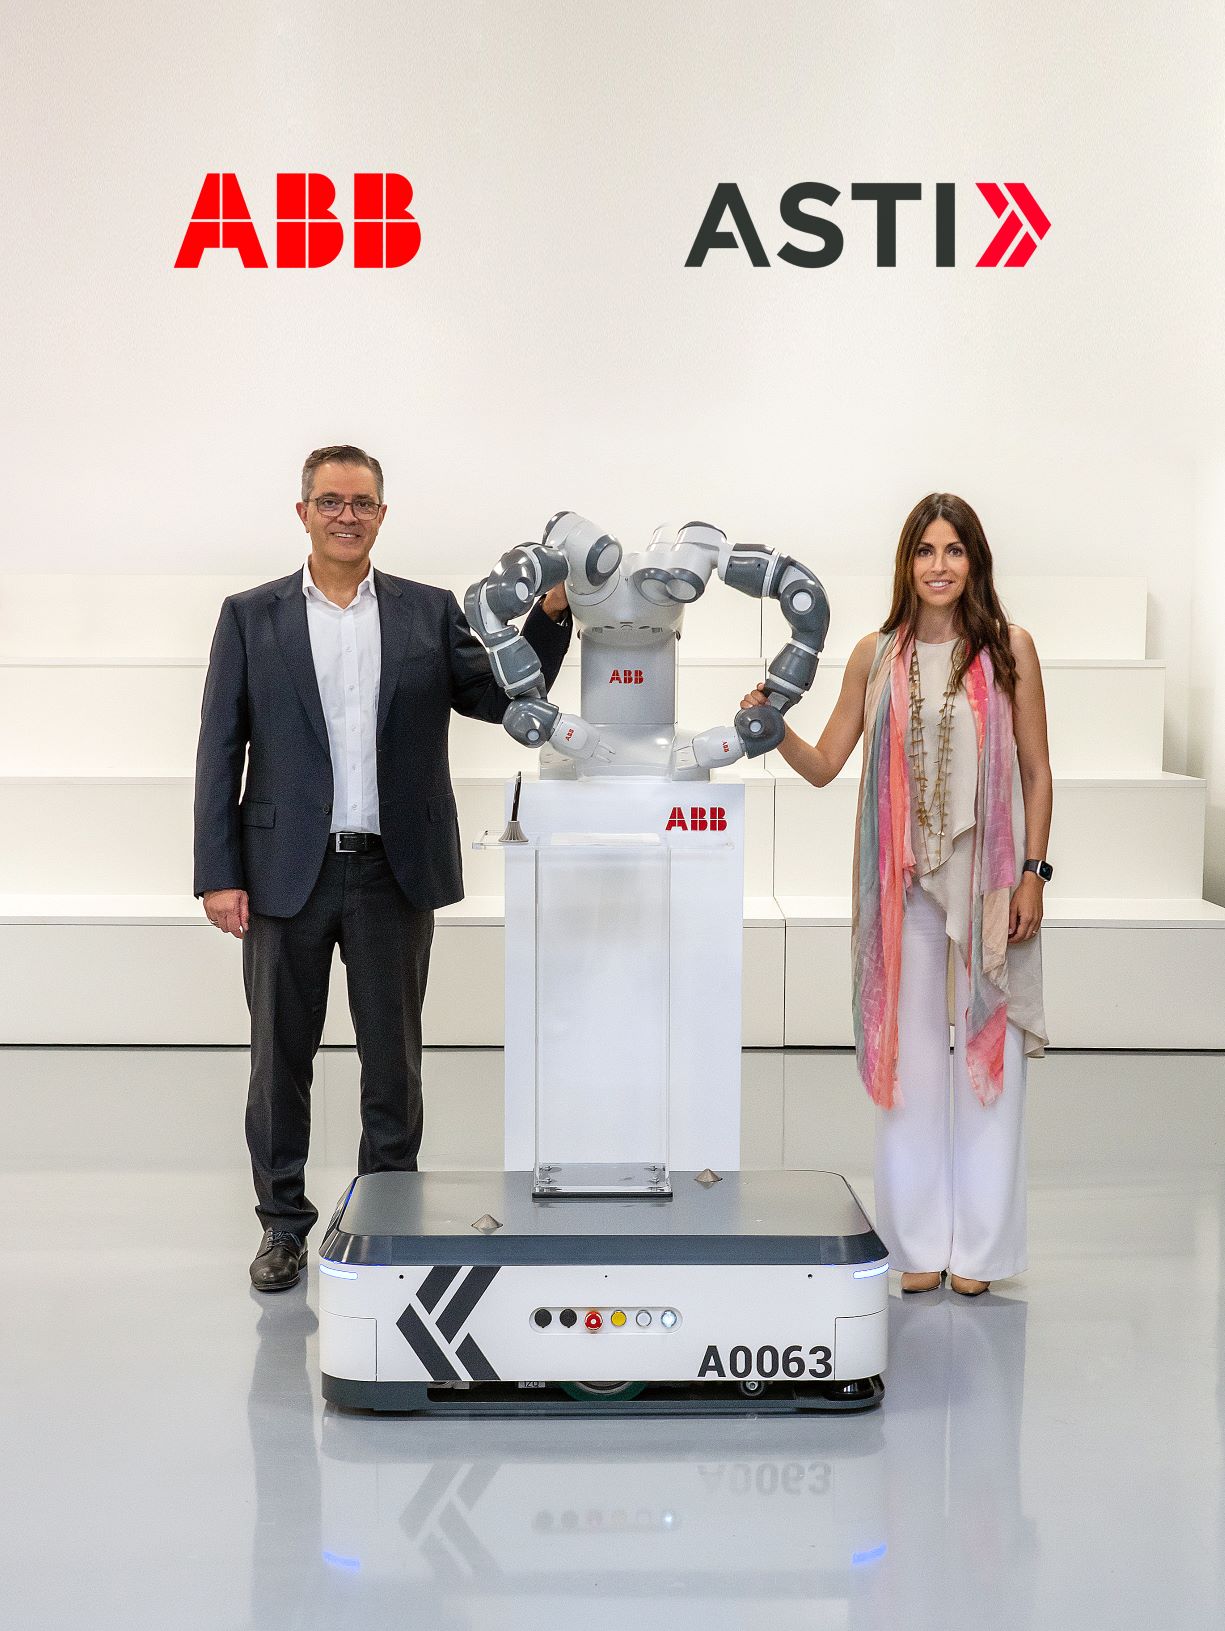 ABB to acquire ASTI Mobile Robotics Group to drive next generation of flexible automation with Autonomous Mobile Robots